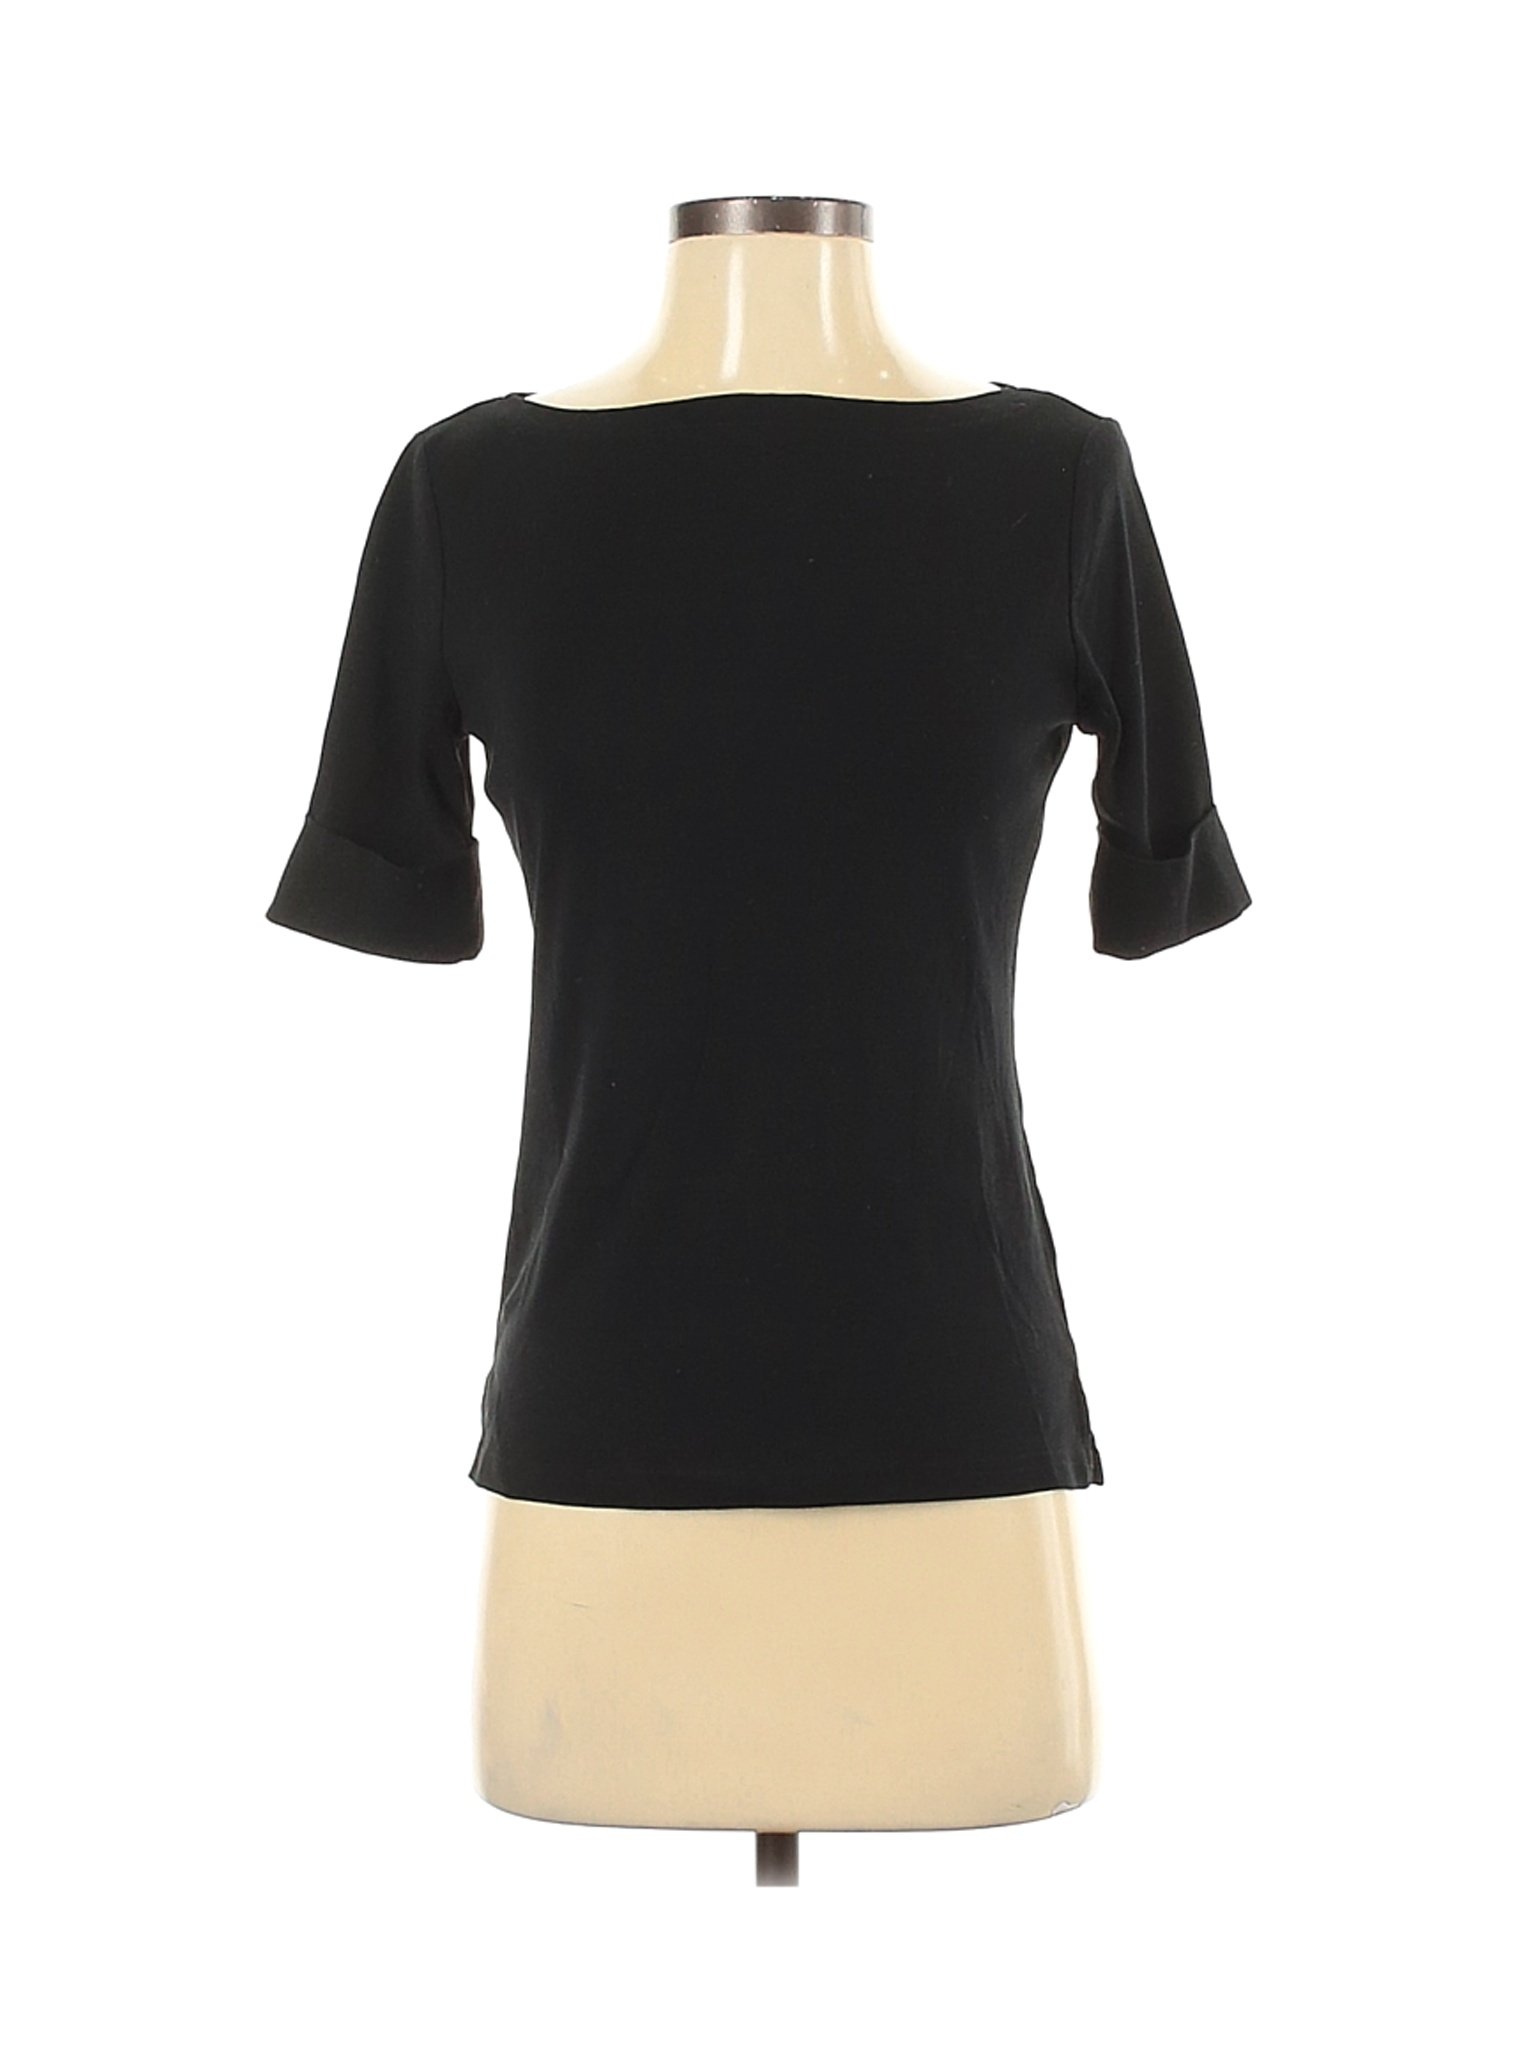 Lauren by Ralph Lauren Women Black Short Sleeve T-Shirt S | eBay